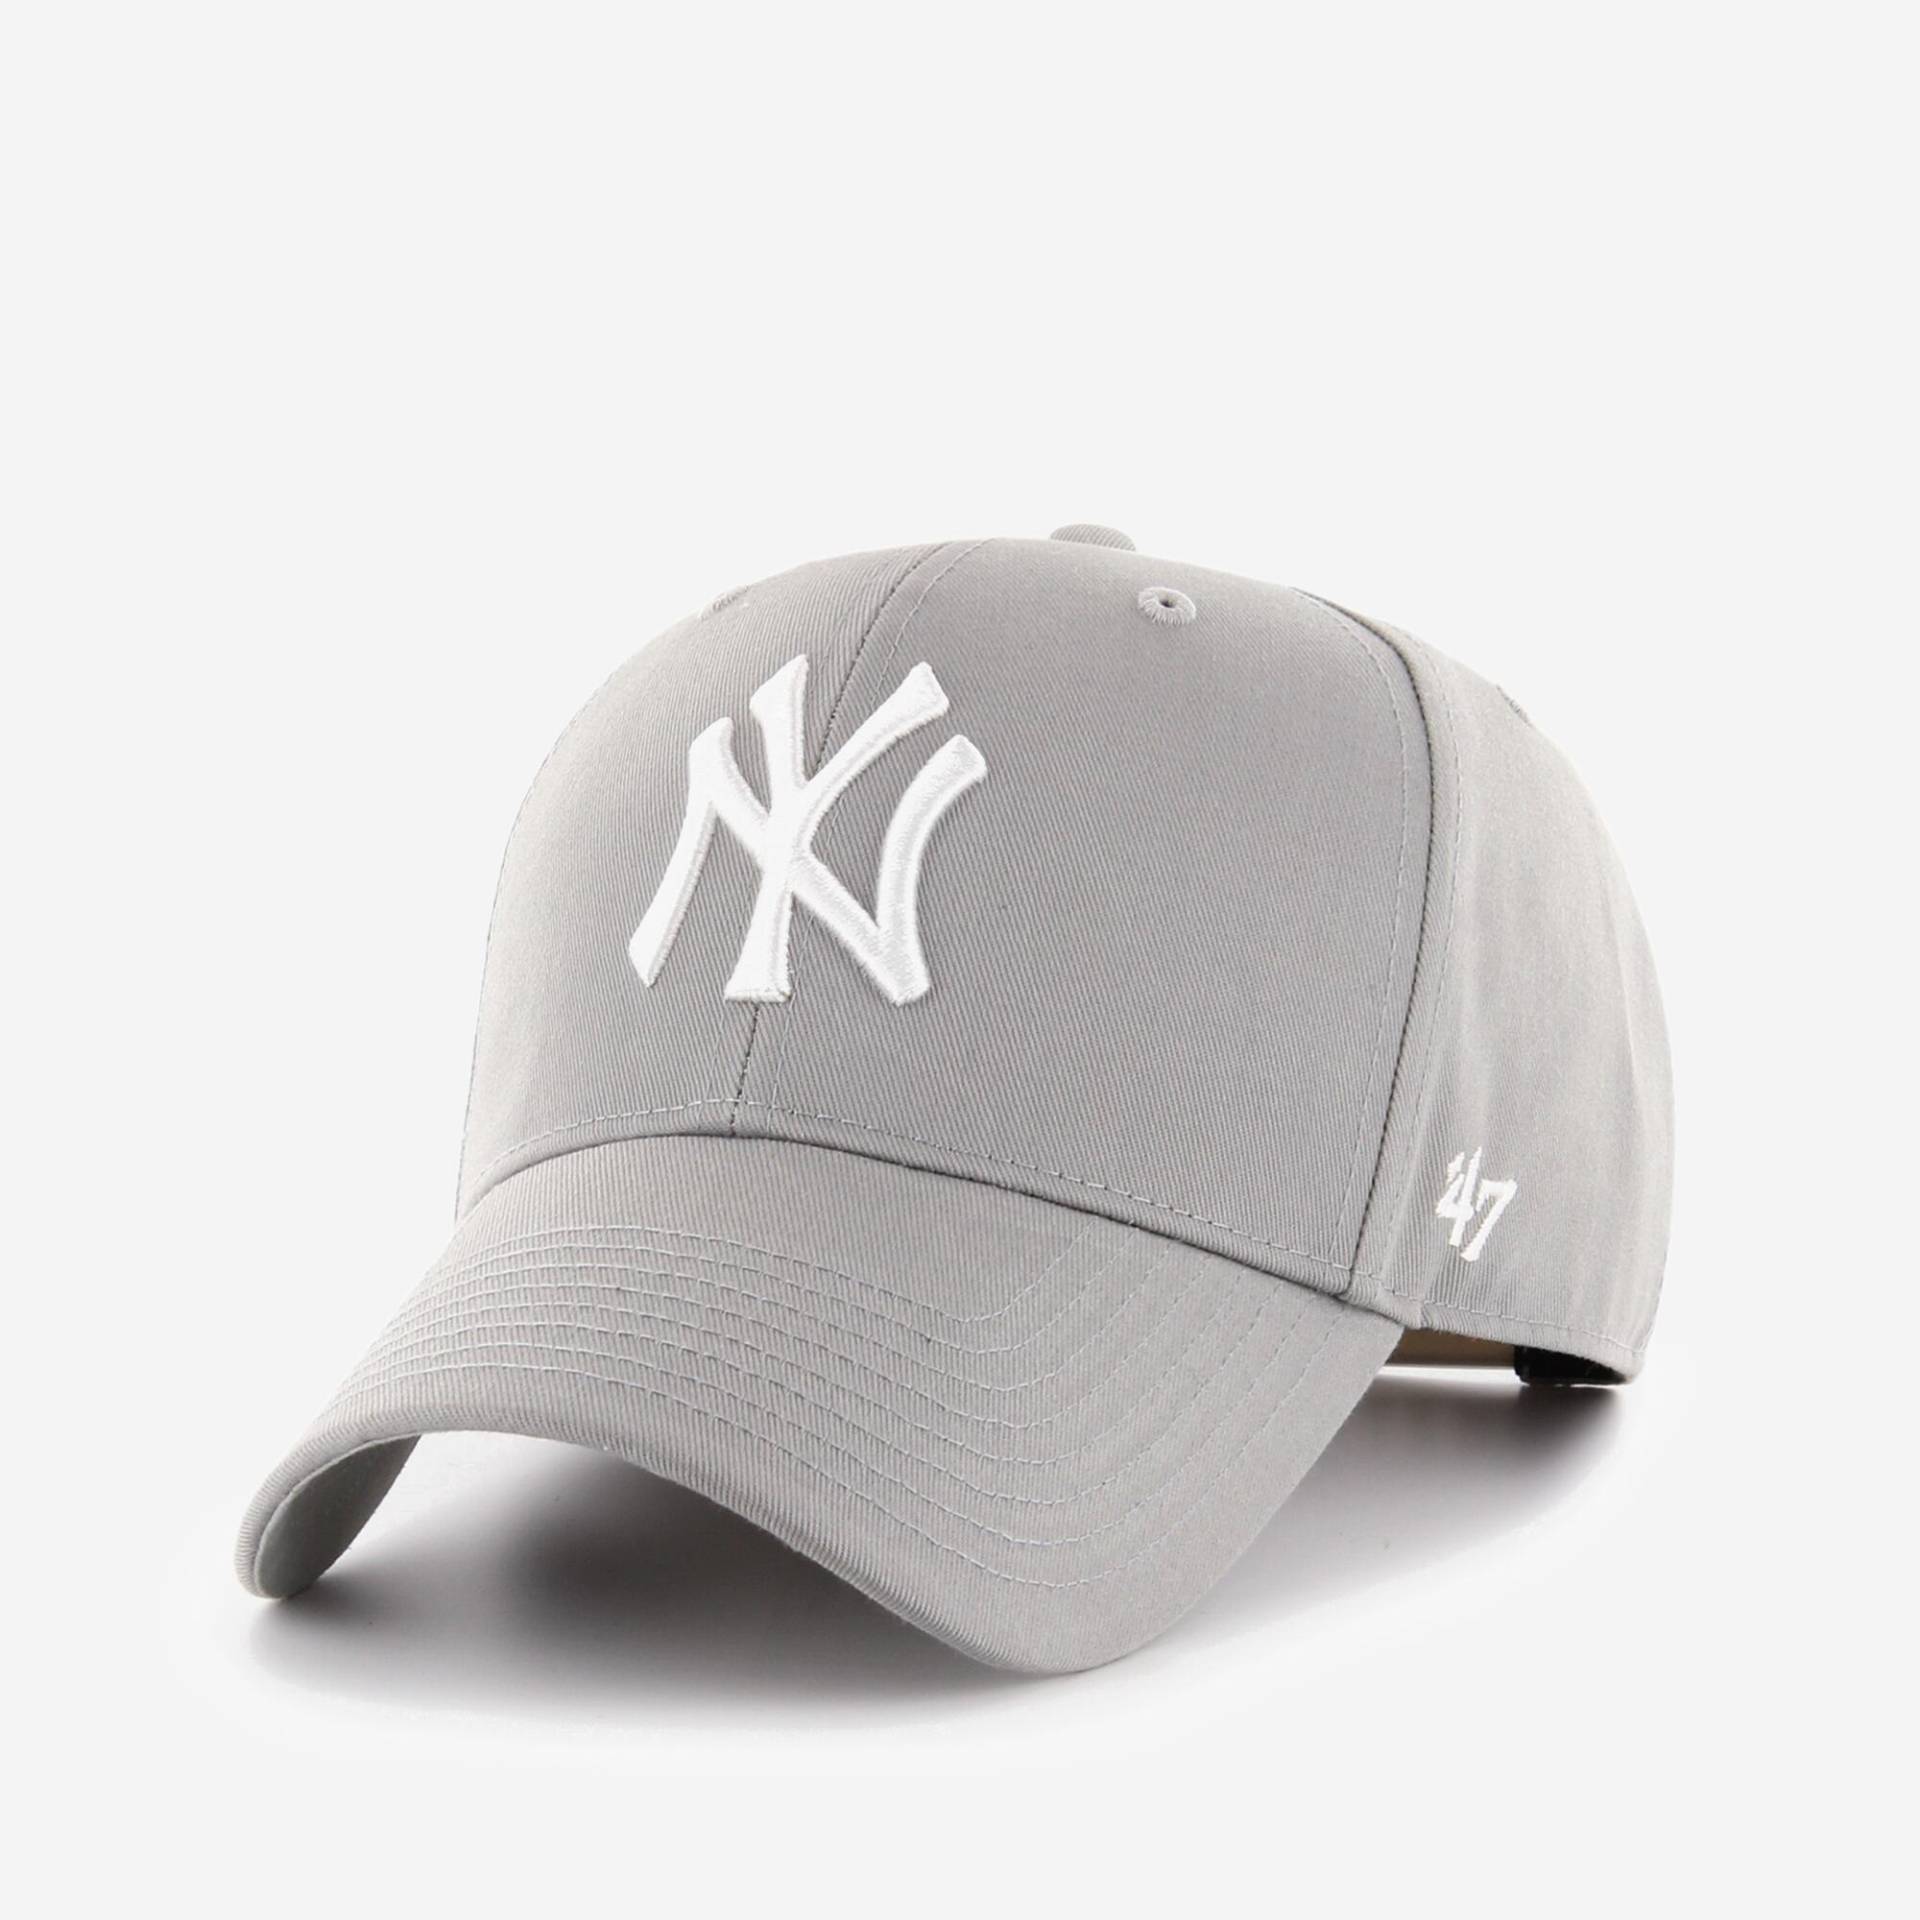 Damen/Herren Baseball Cap - New York Yankees grau von 47 BRAND